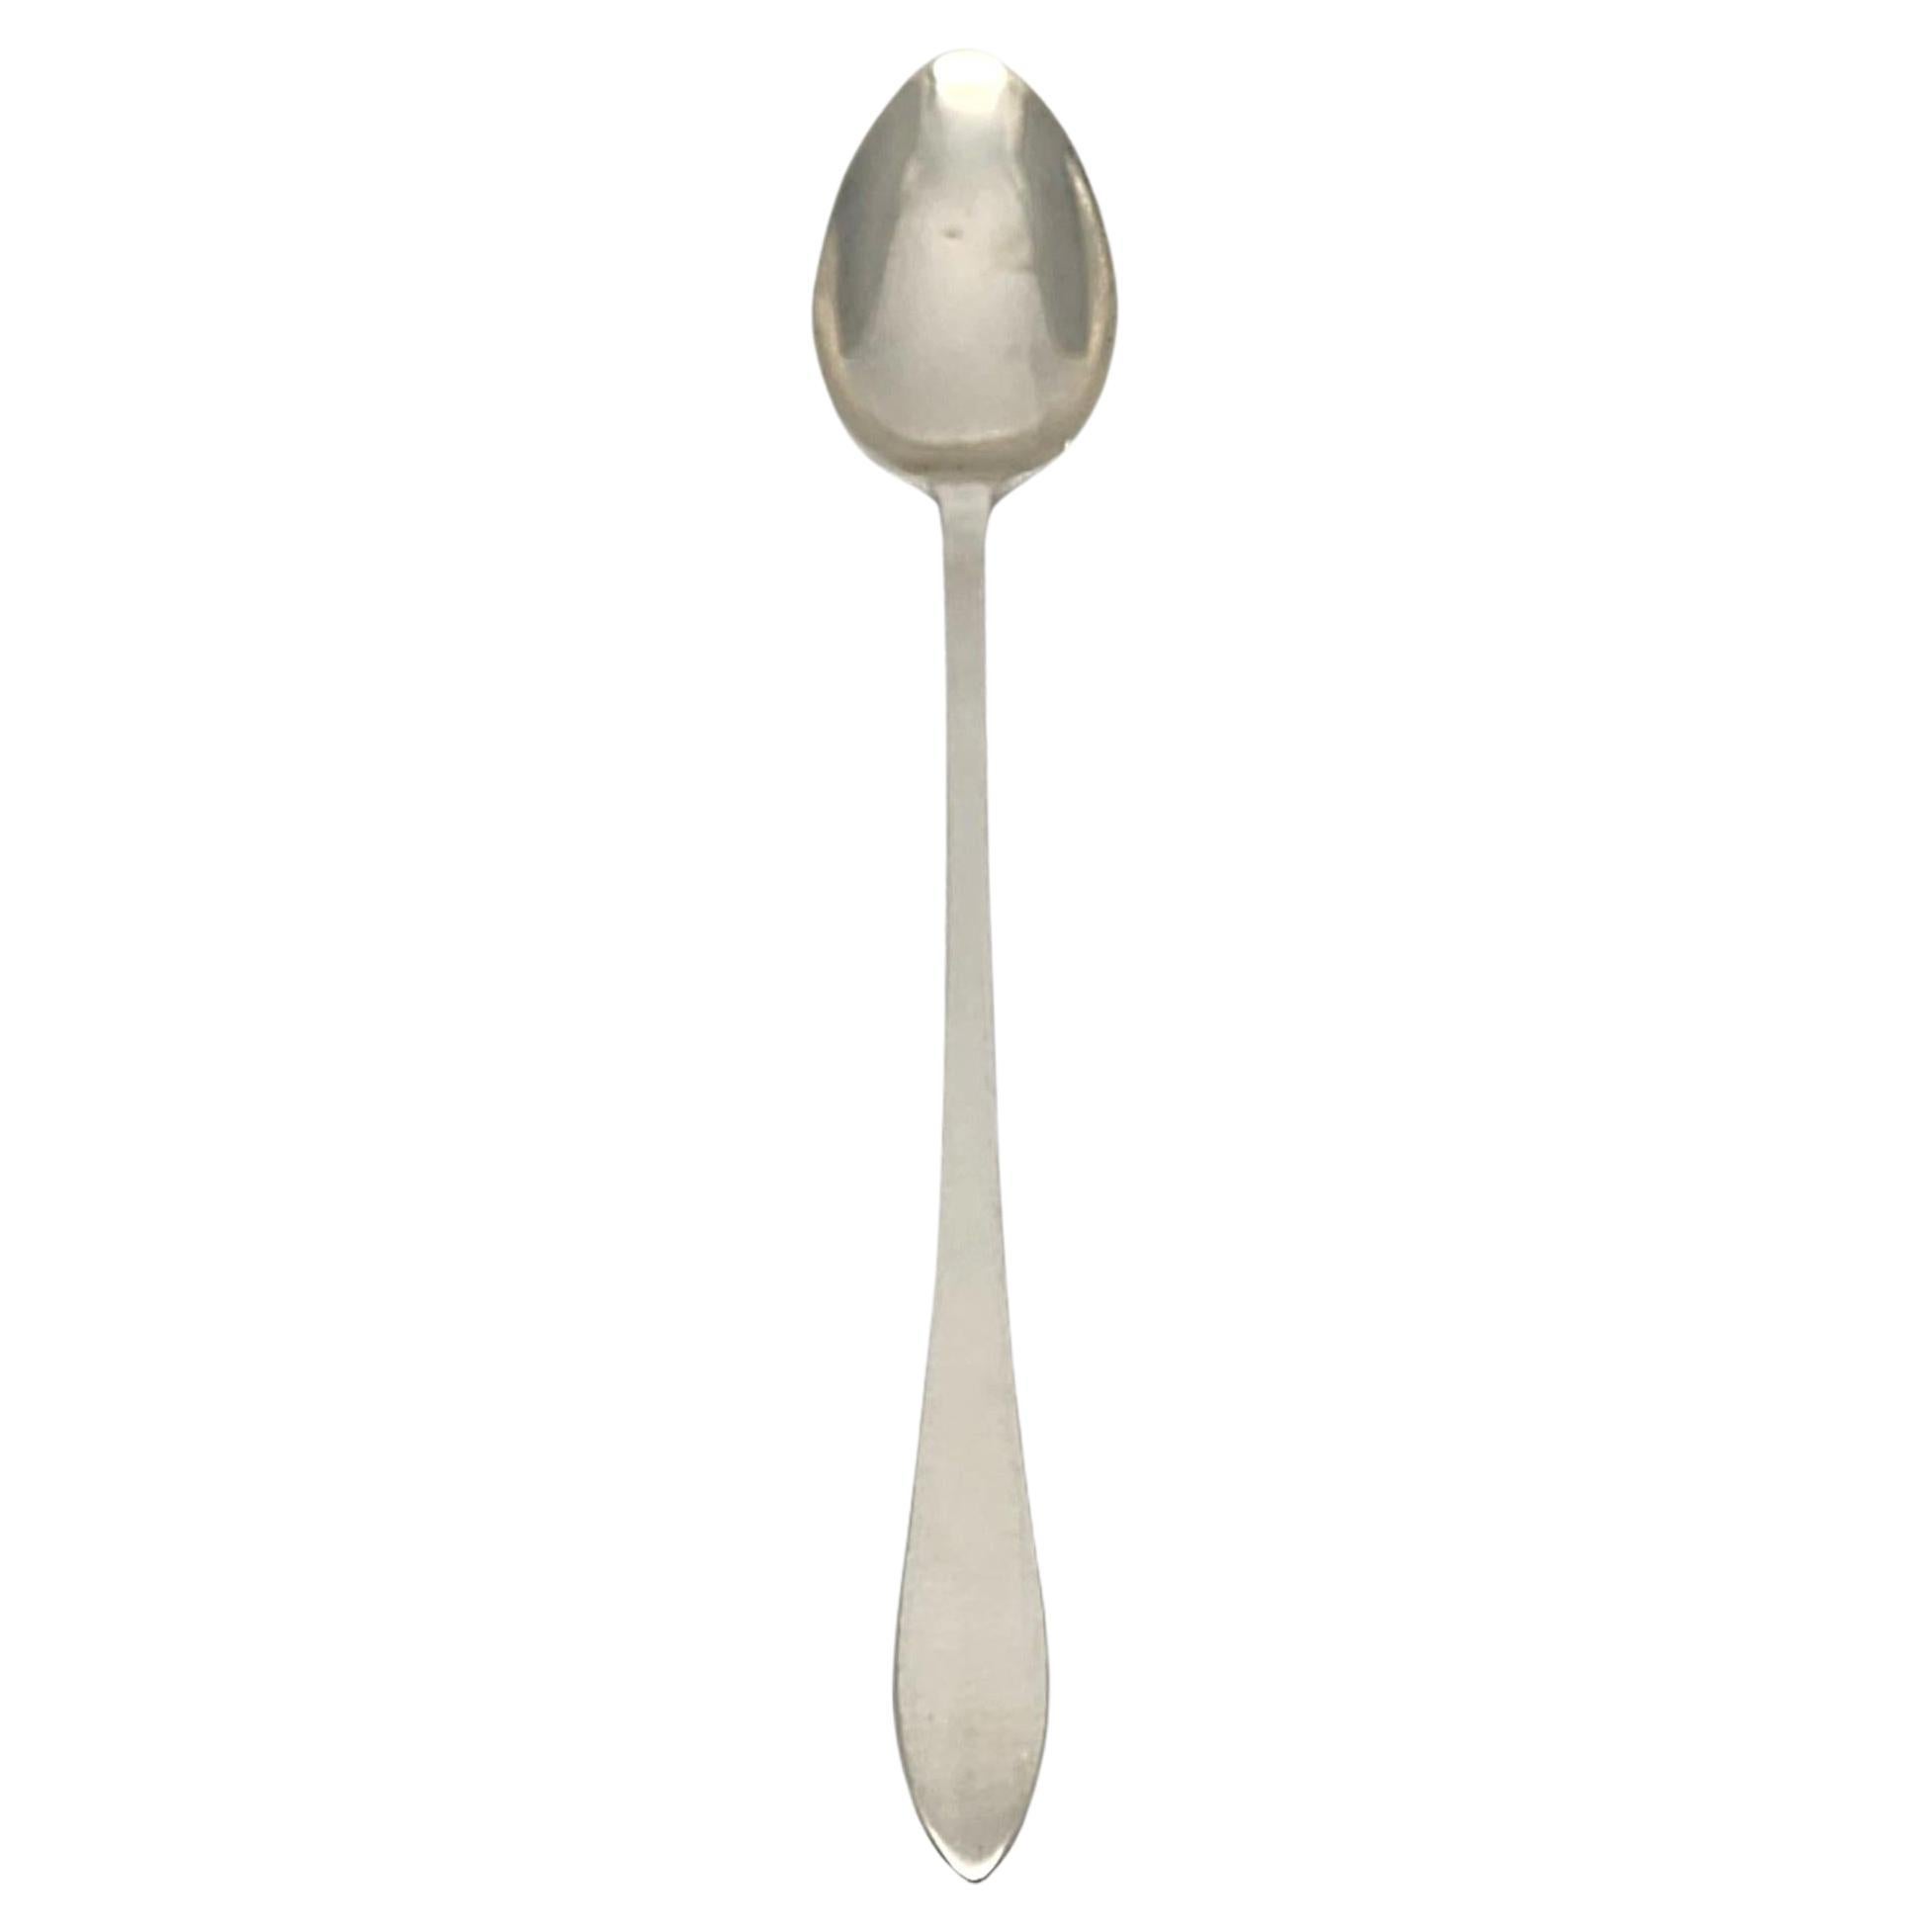 Tiffany & Co Faneuil Sterling Silver Baby Feeding Spoon #15489